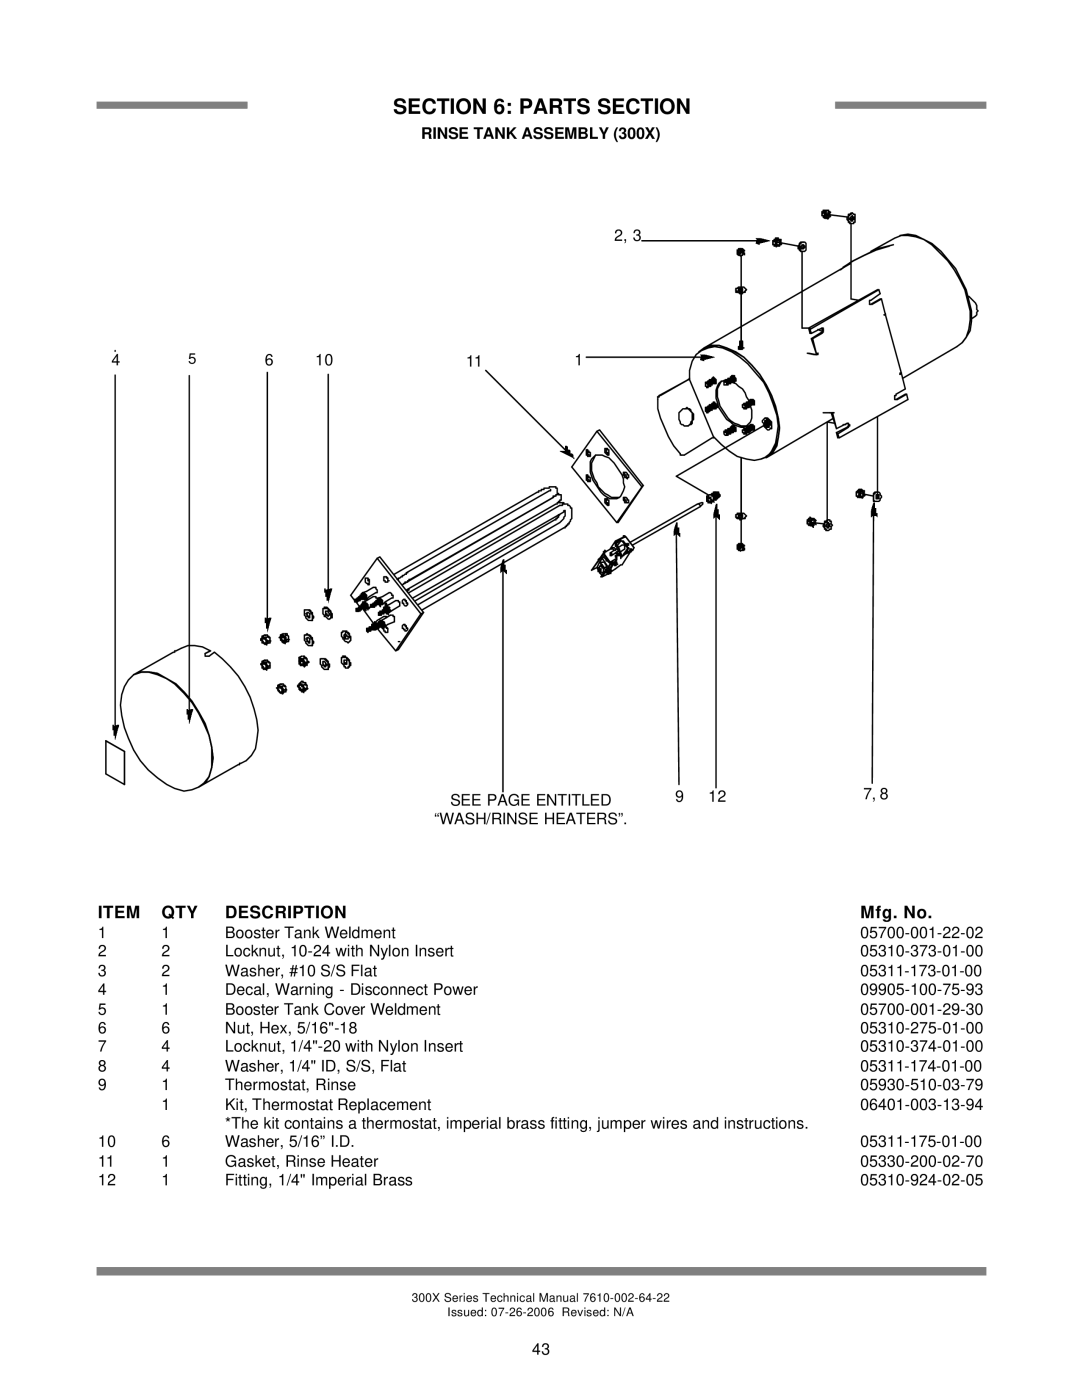 Jackson 300XS, 300XLT, 300XN technical manual Rinse Tank Assembly, Parts Section, Description, Mfg. No 